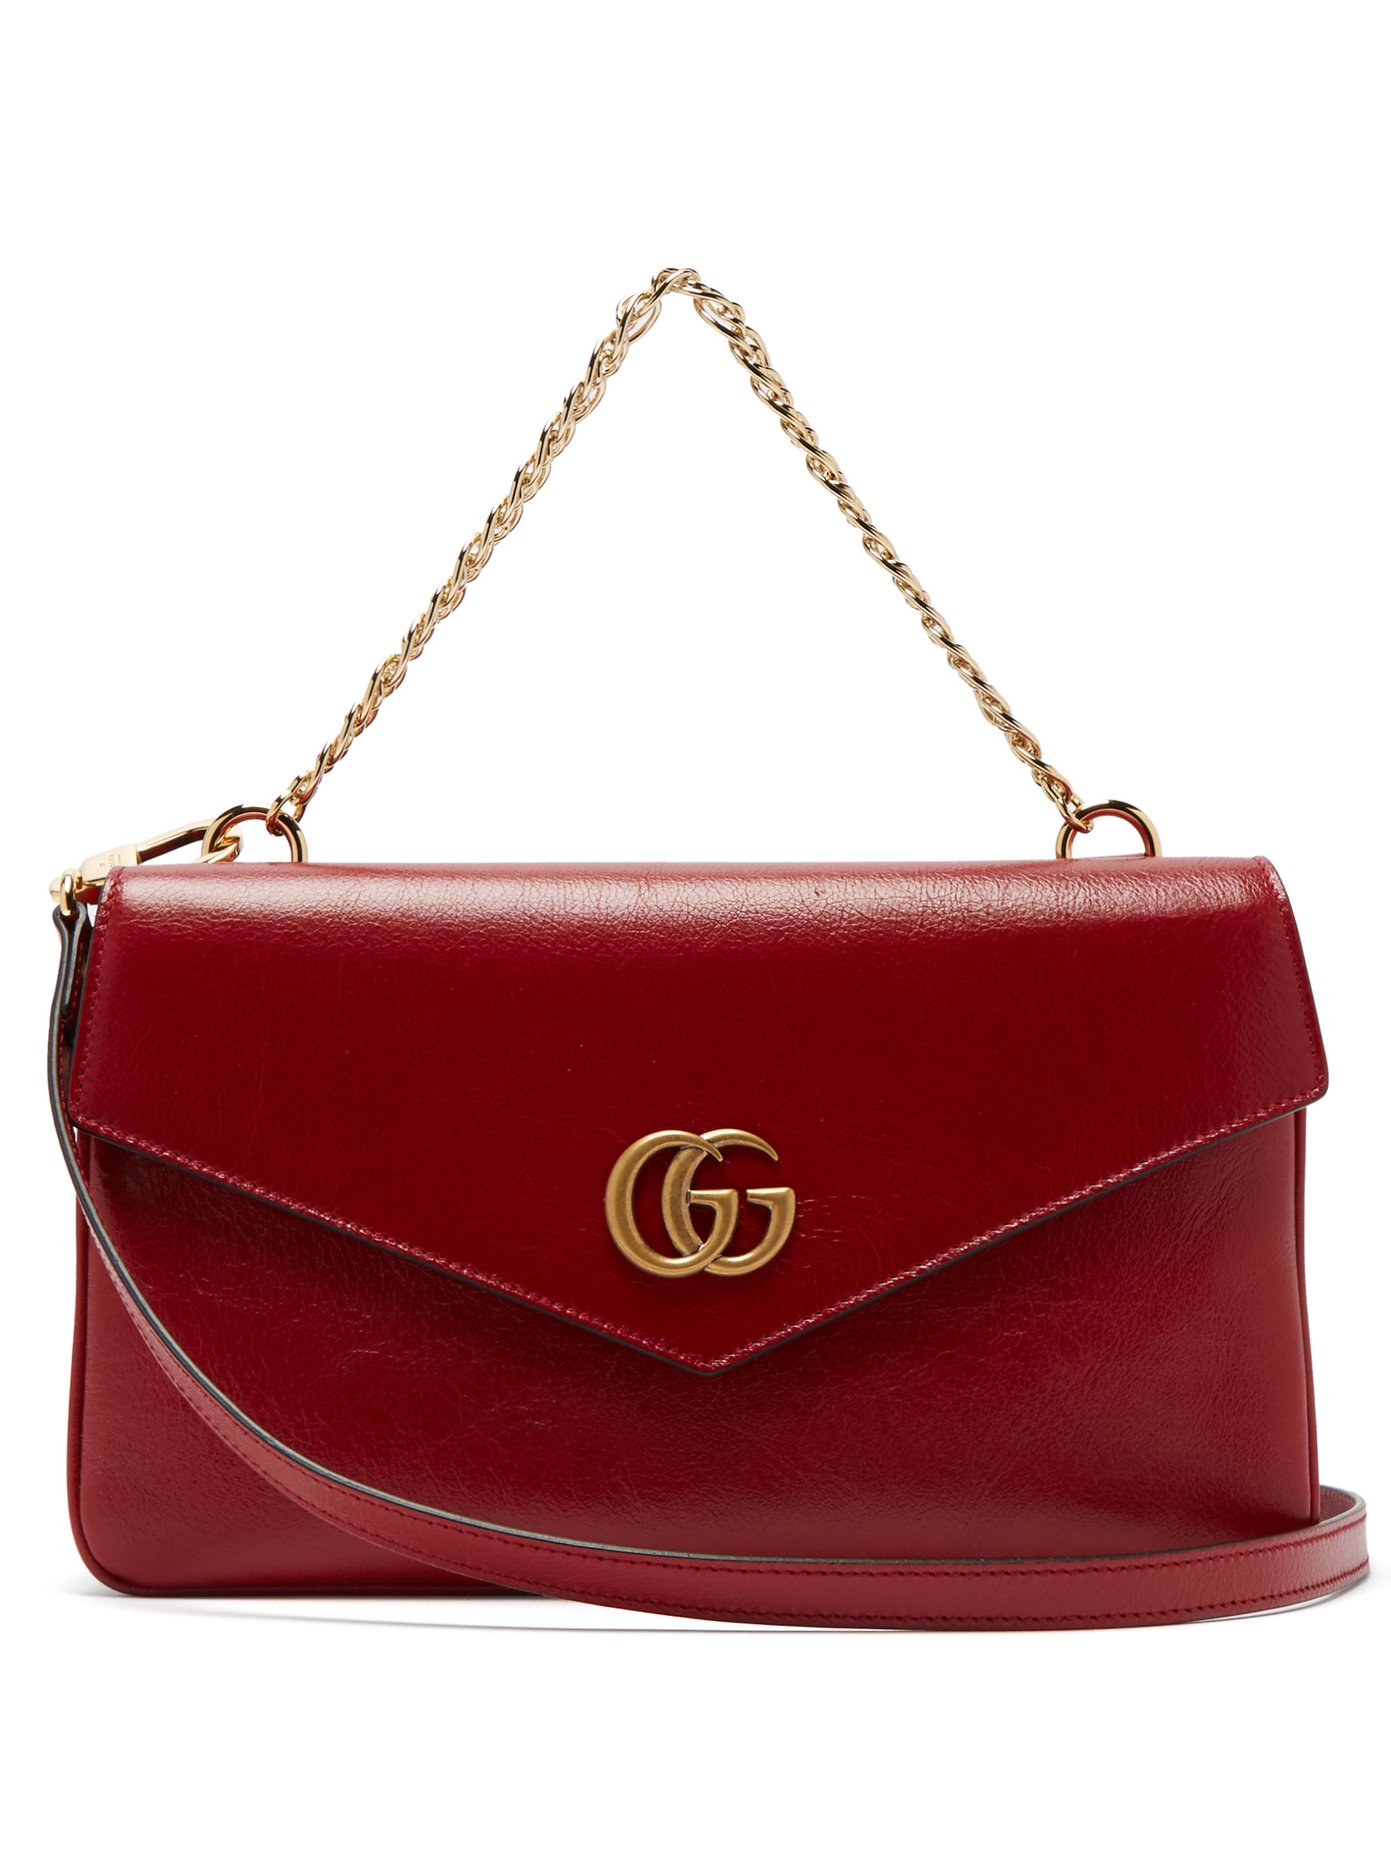 Thiara GG leather shoulder bag | Gucci 